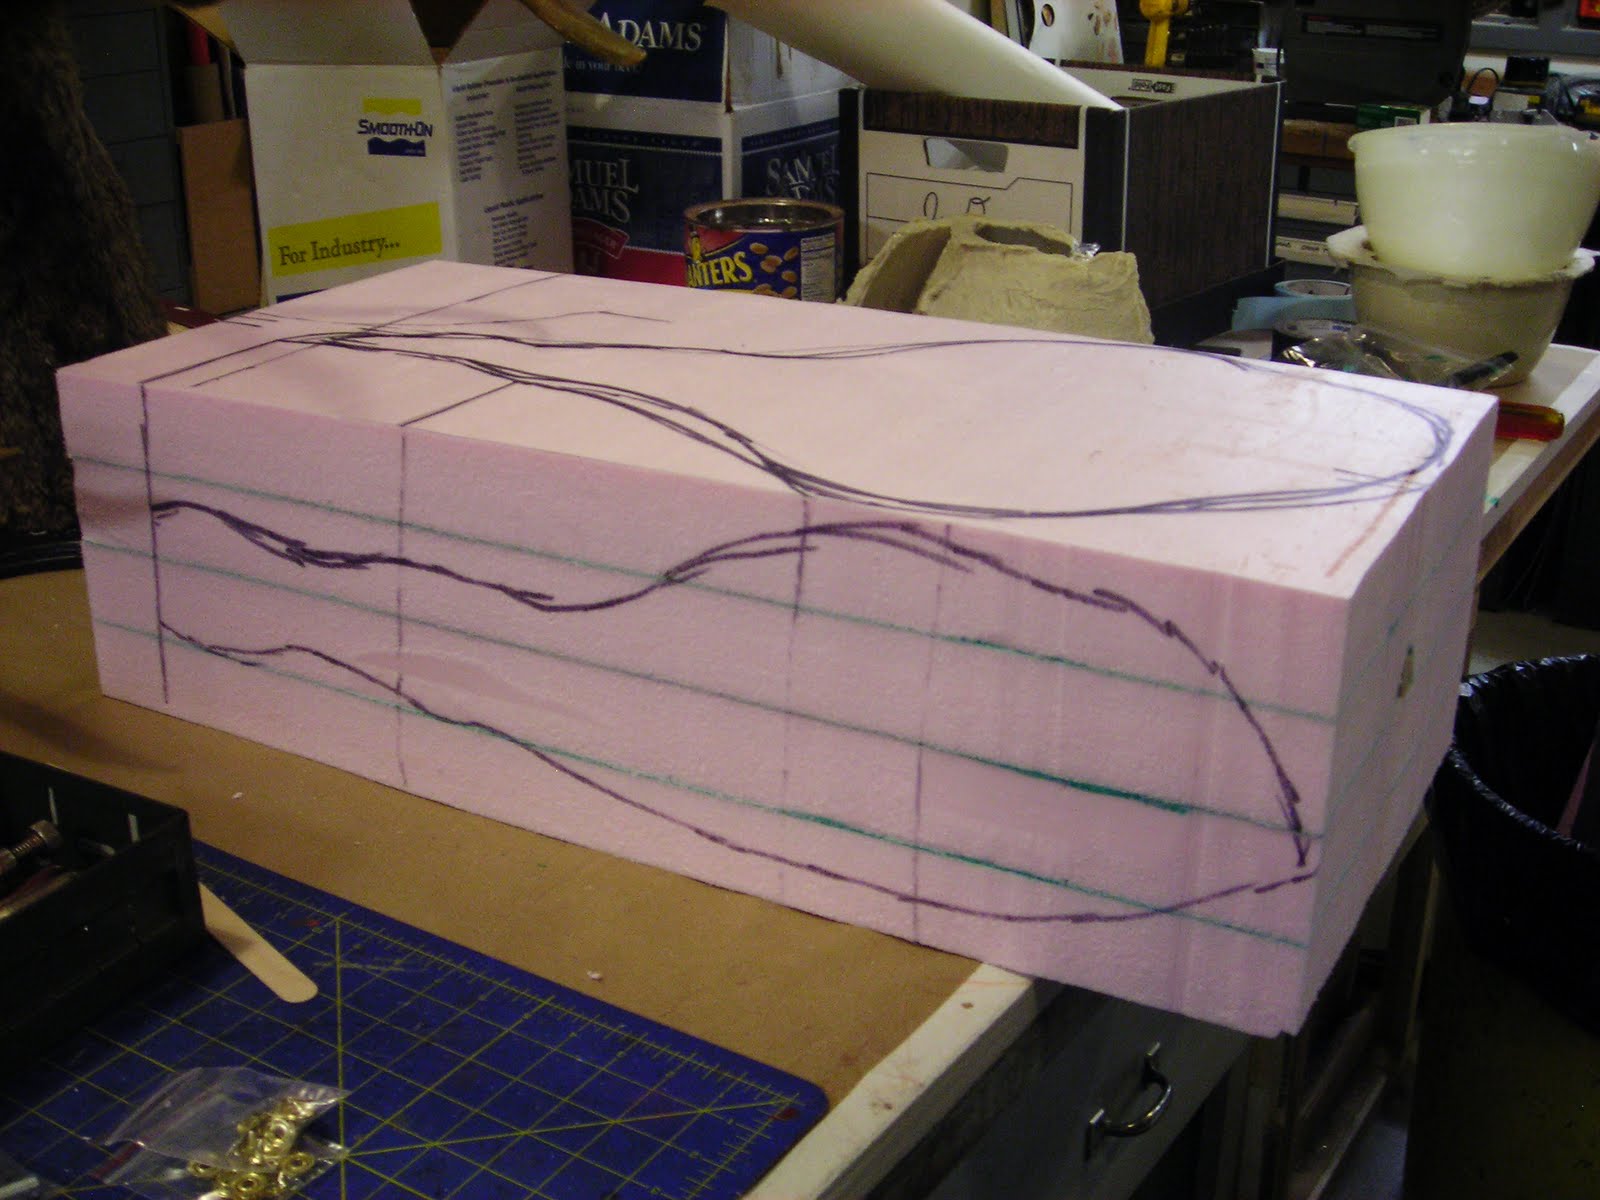 Fake 'N Bake Blog: Materials Monday - Insulation Foam